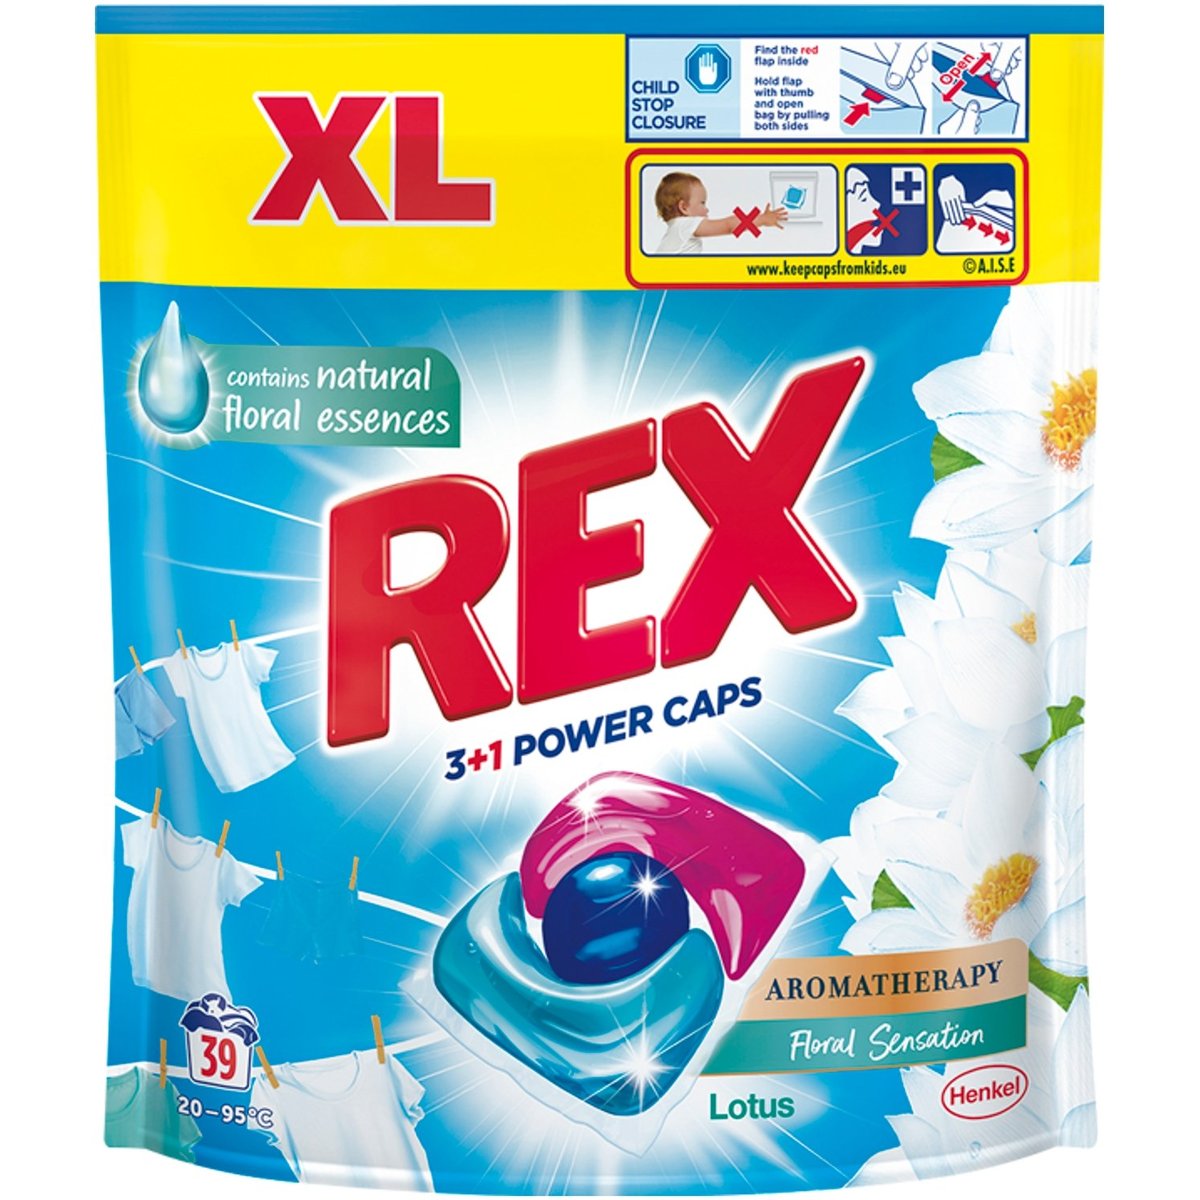 Rex Power Caps Aromatherapy Lotus & Almond Oil prací kapsle